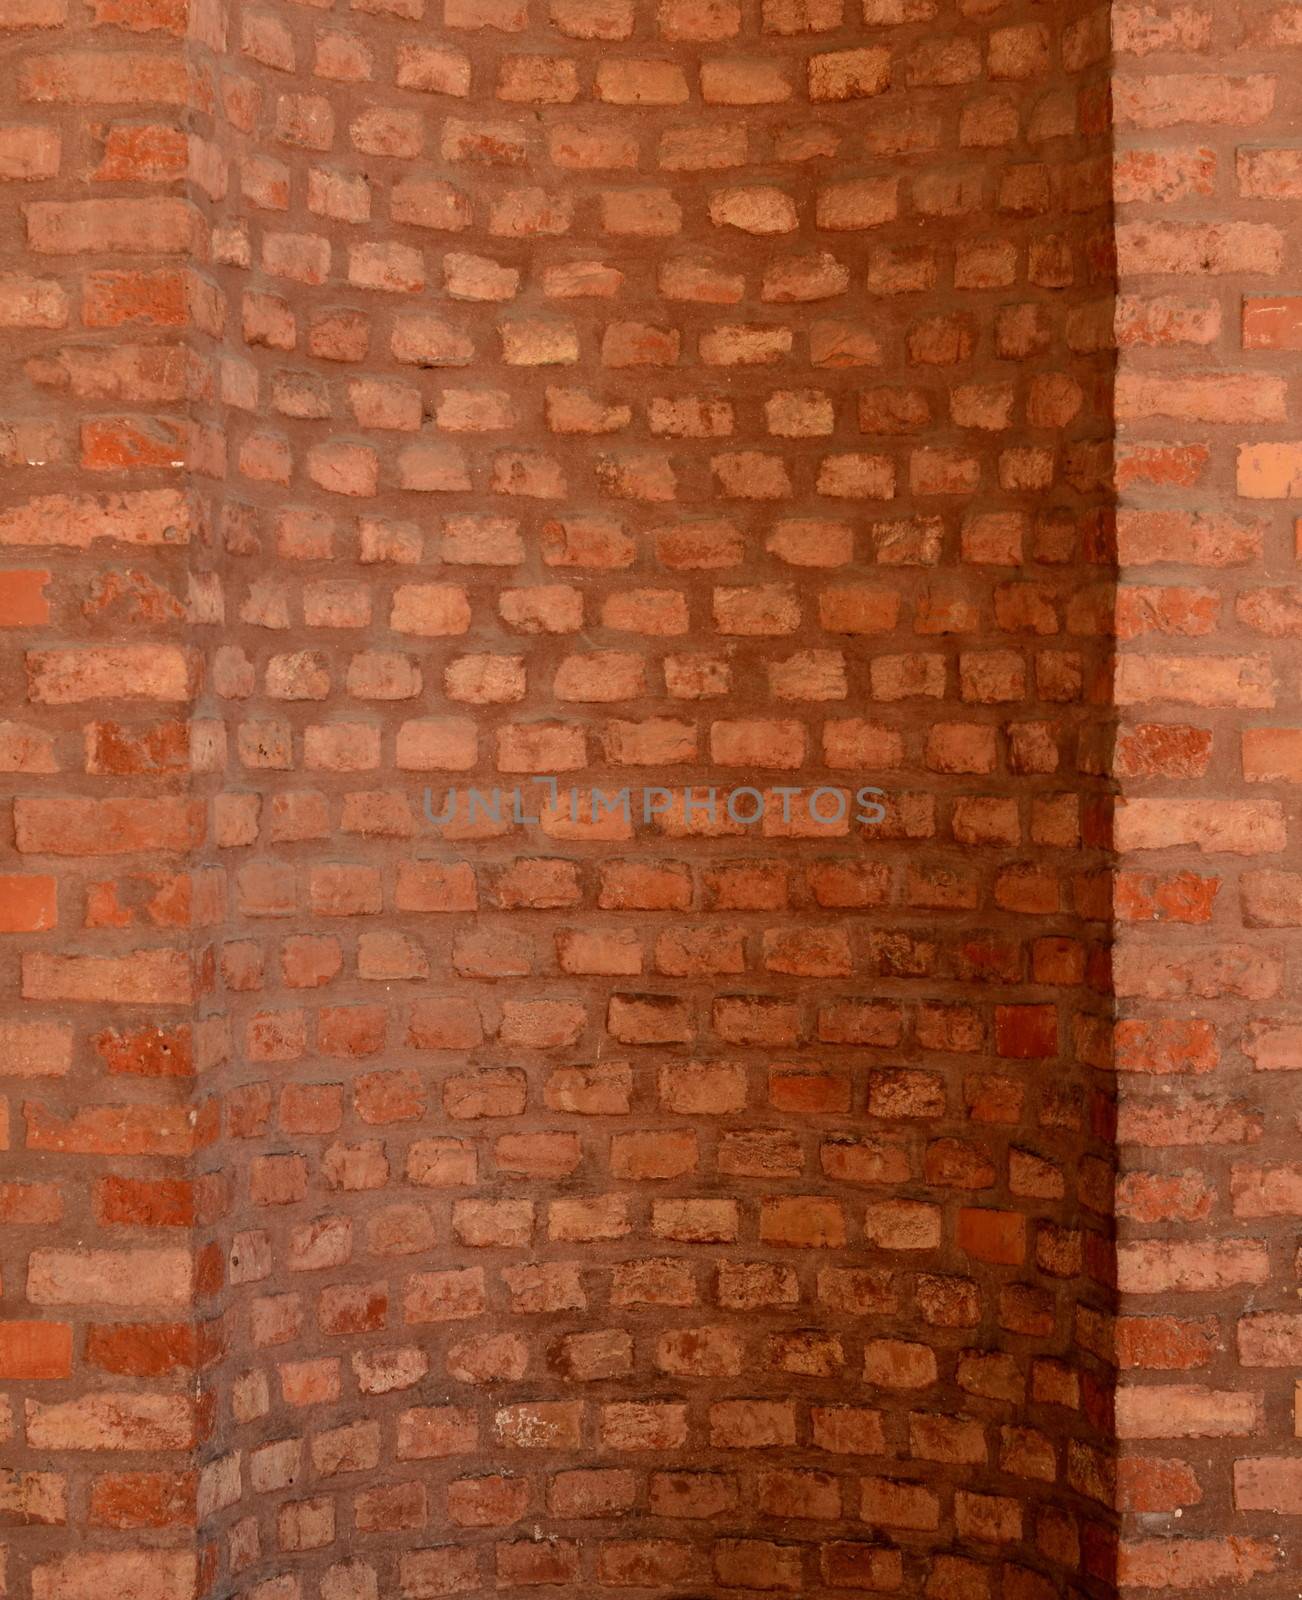 Curved Brickwork by mrdoomits